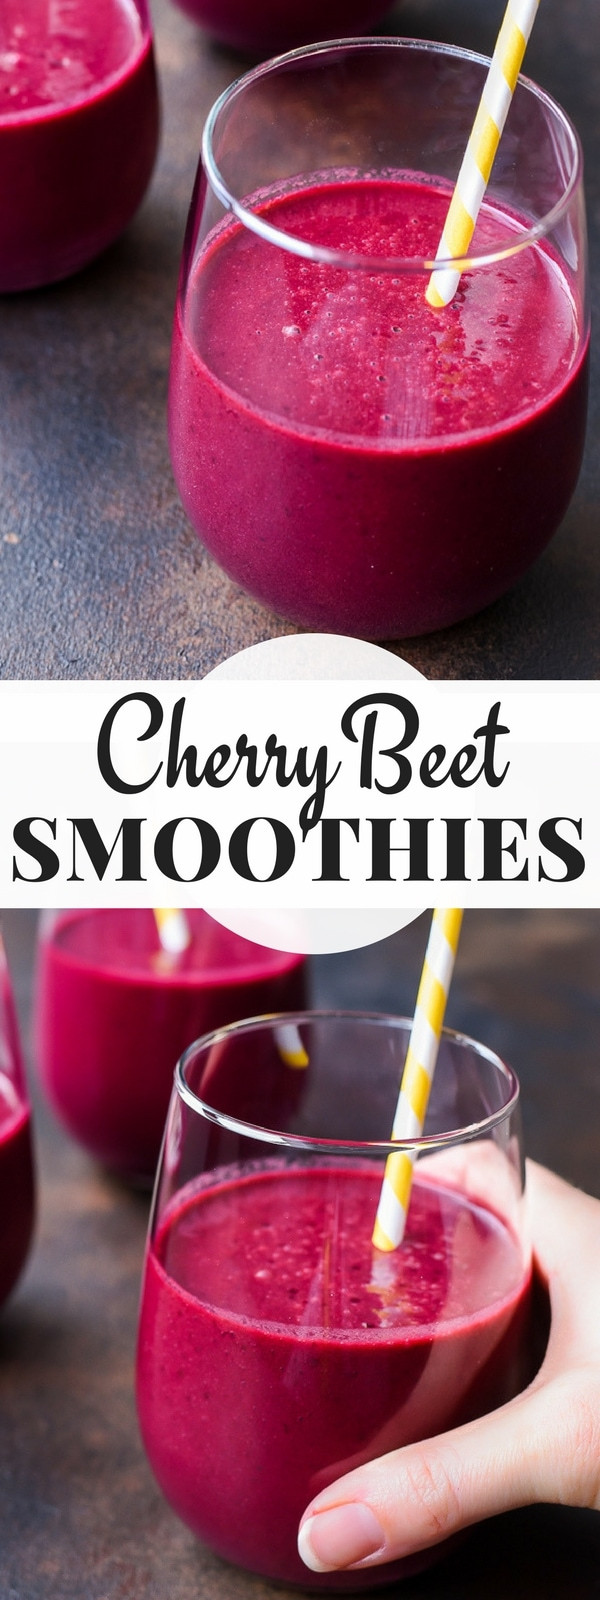 Beet Smoothie Recipes
 Cherry Beet Smoothie Recipe